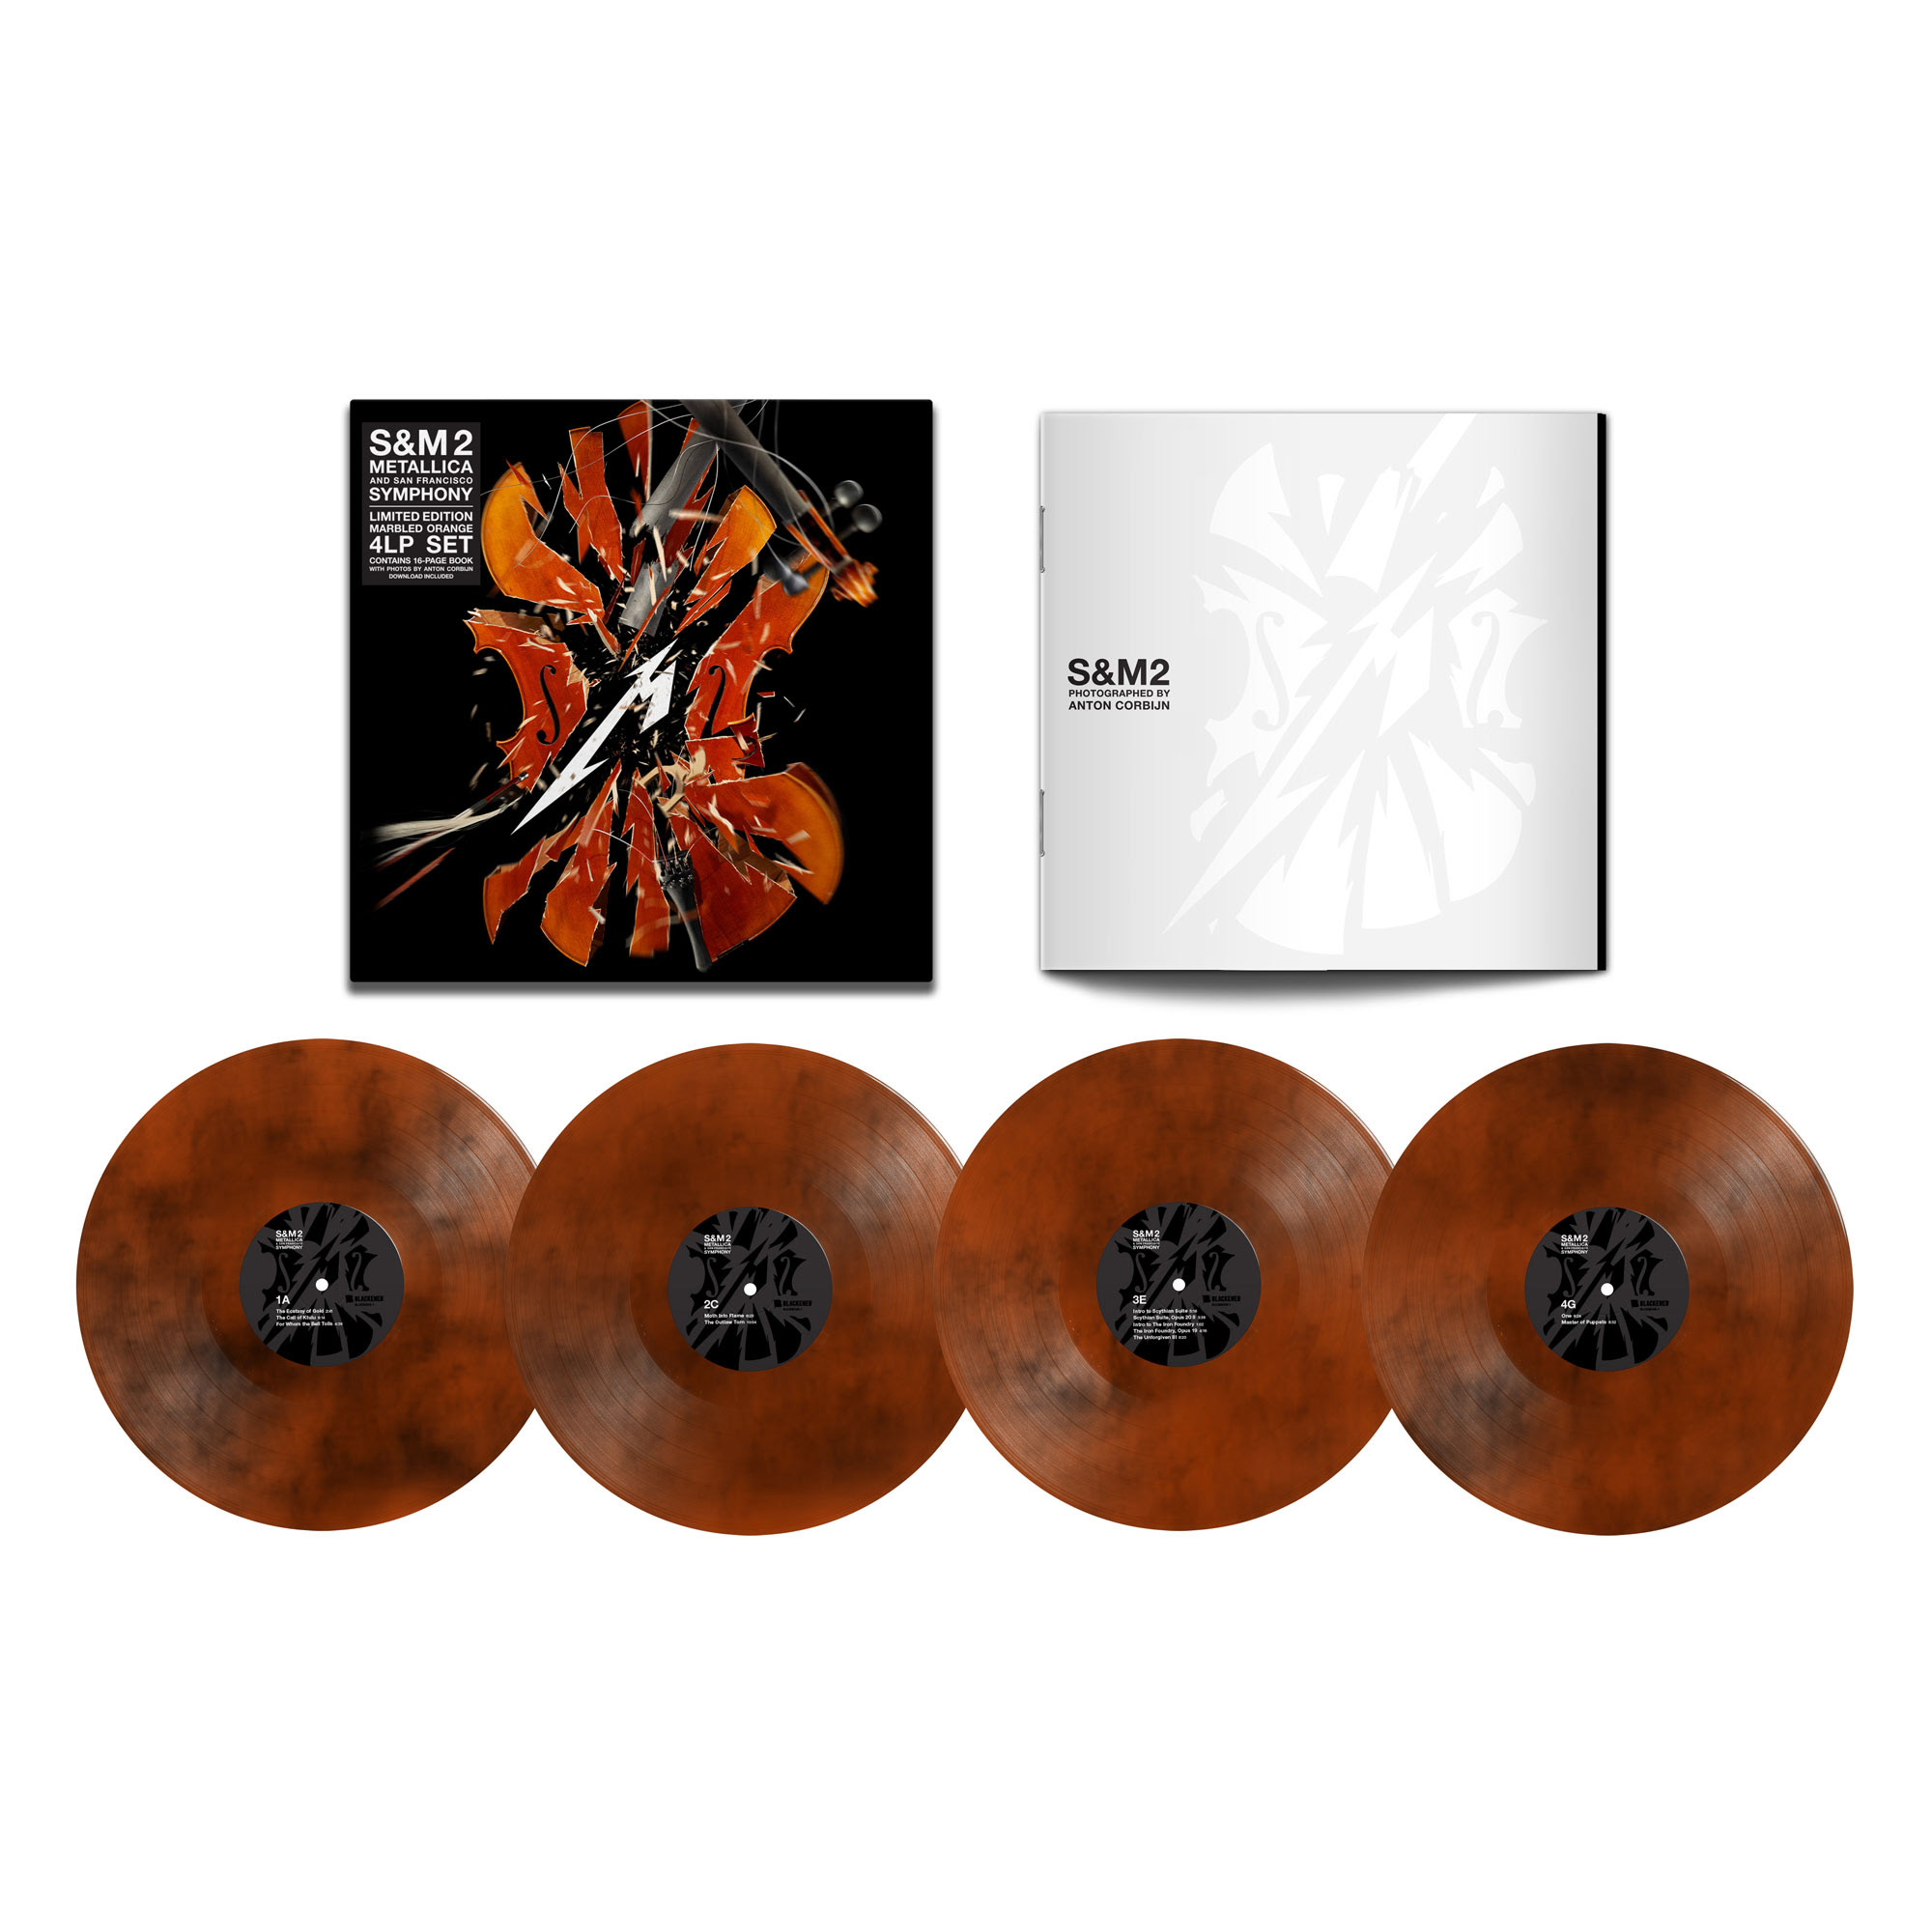 S&M2 4LP Vinyl (Orange Marble)